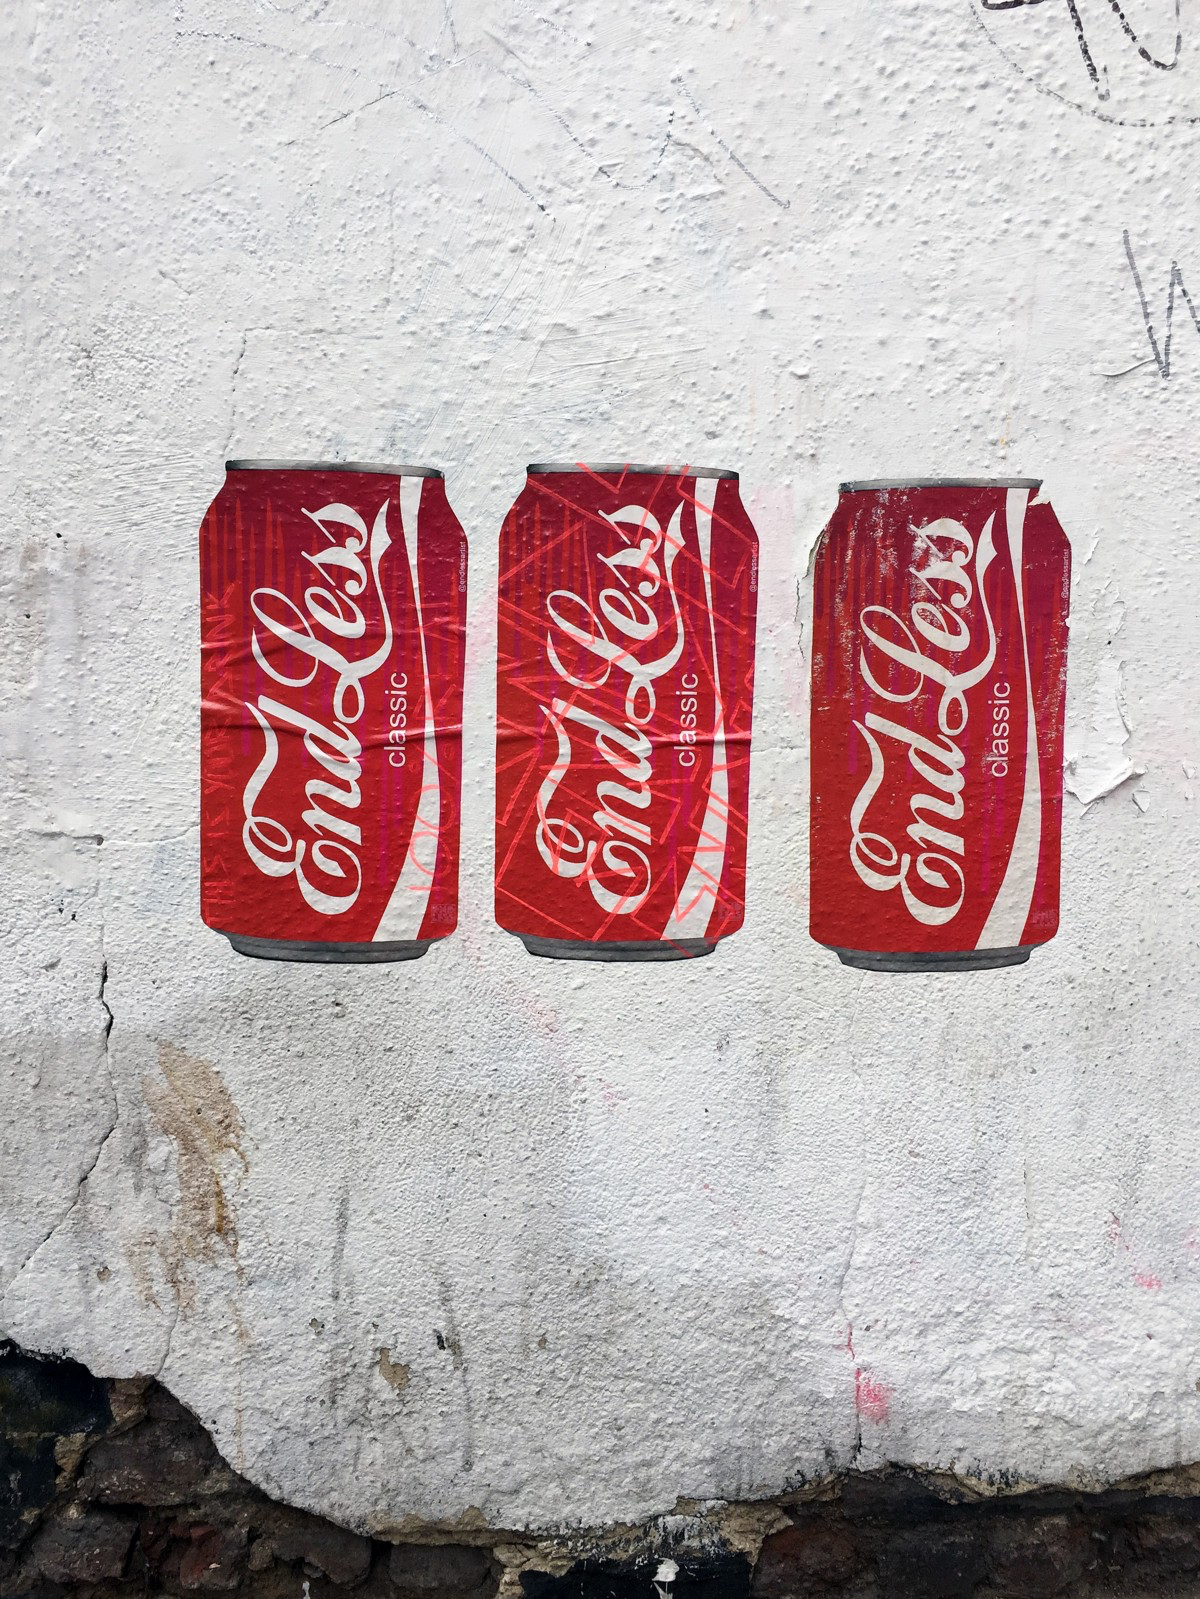 More Than You Can Imagine - Street Art: Louis Vuitton Graffiti